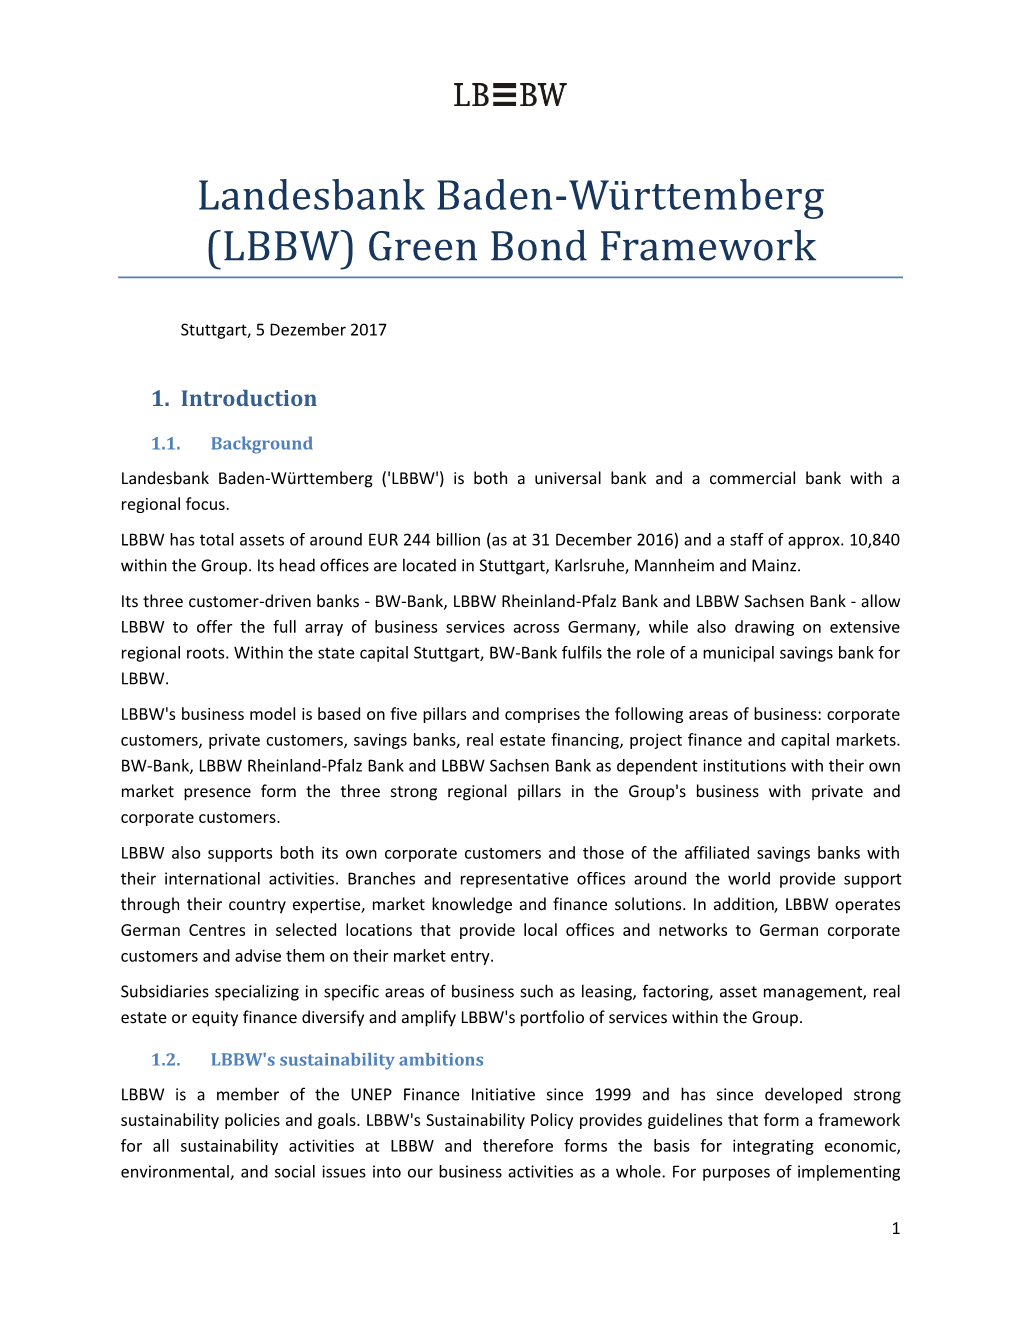 Landesbank Baden-Württemberg (LBBW) Green Bond Framework